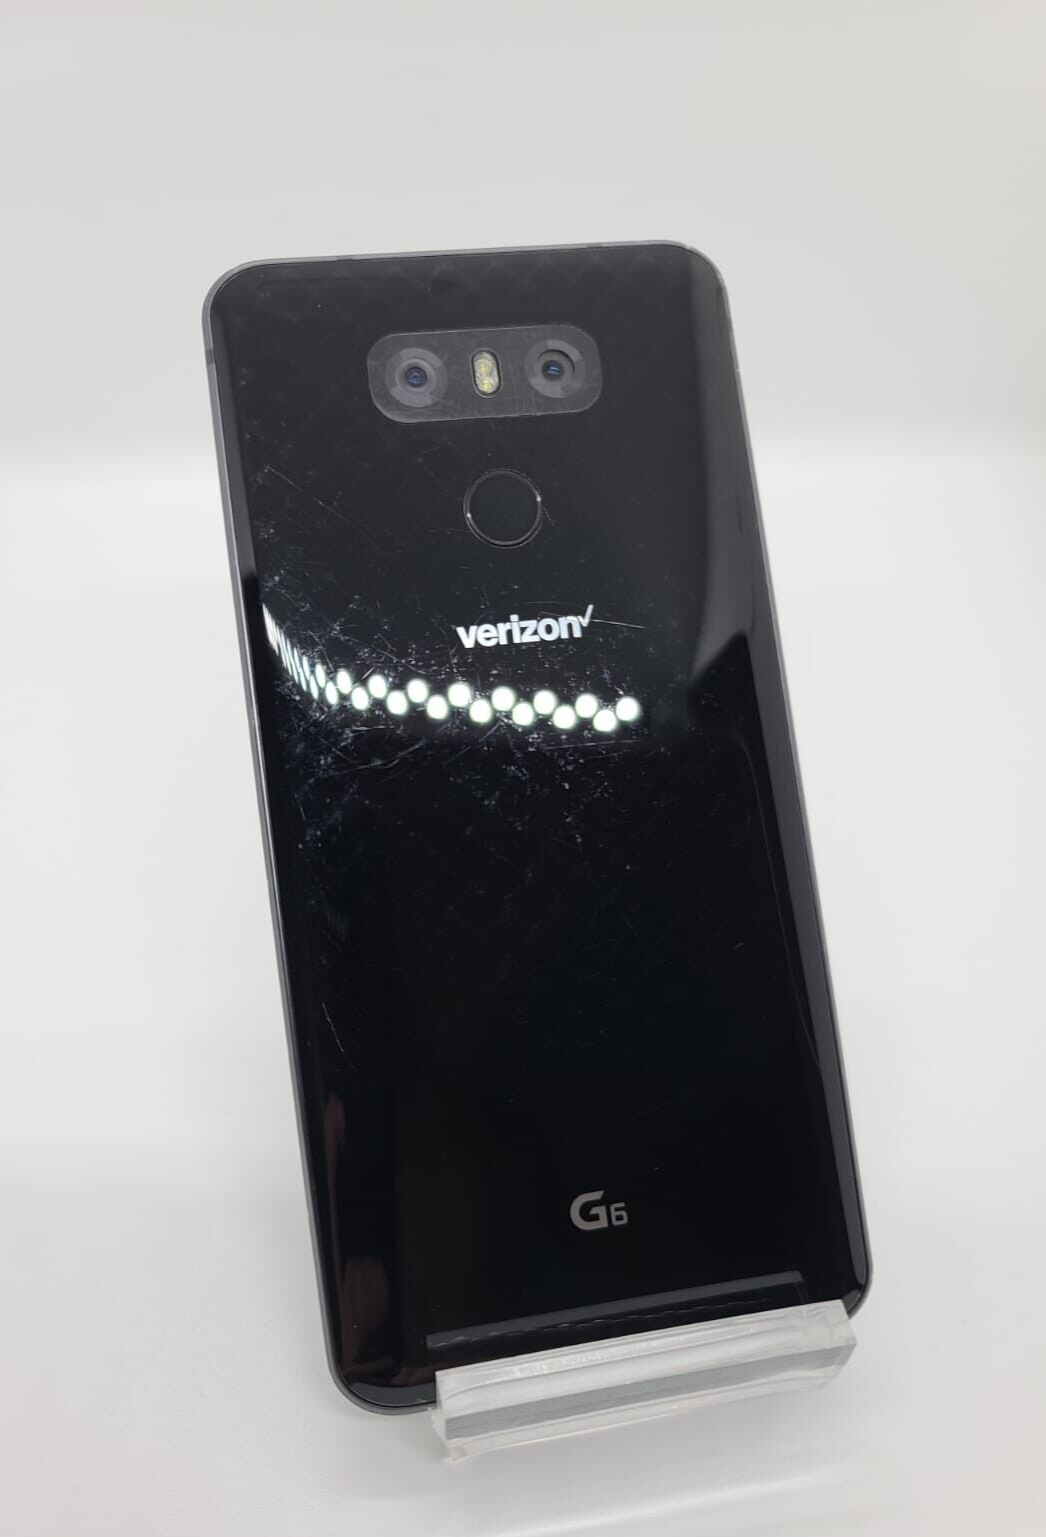 LG G6 32GB Verizon Android Black 4G LTE Smartphone VS988